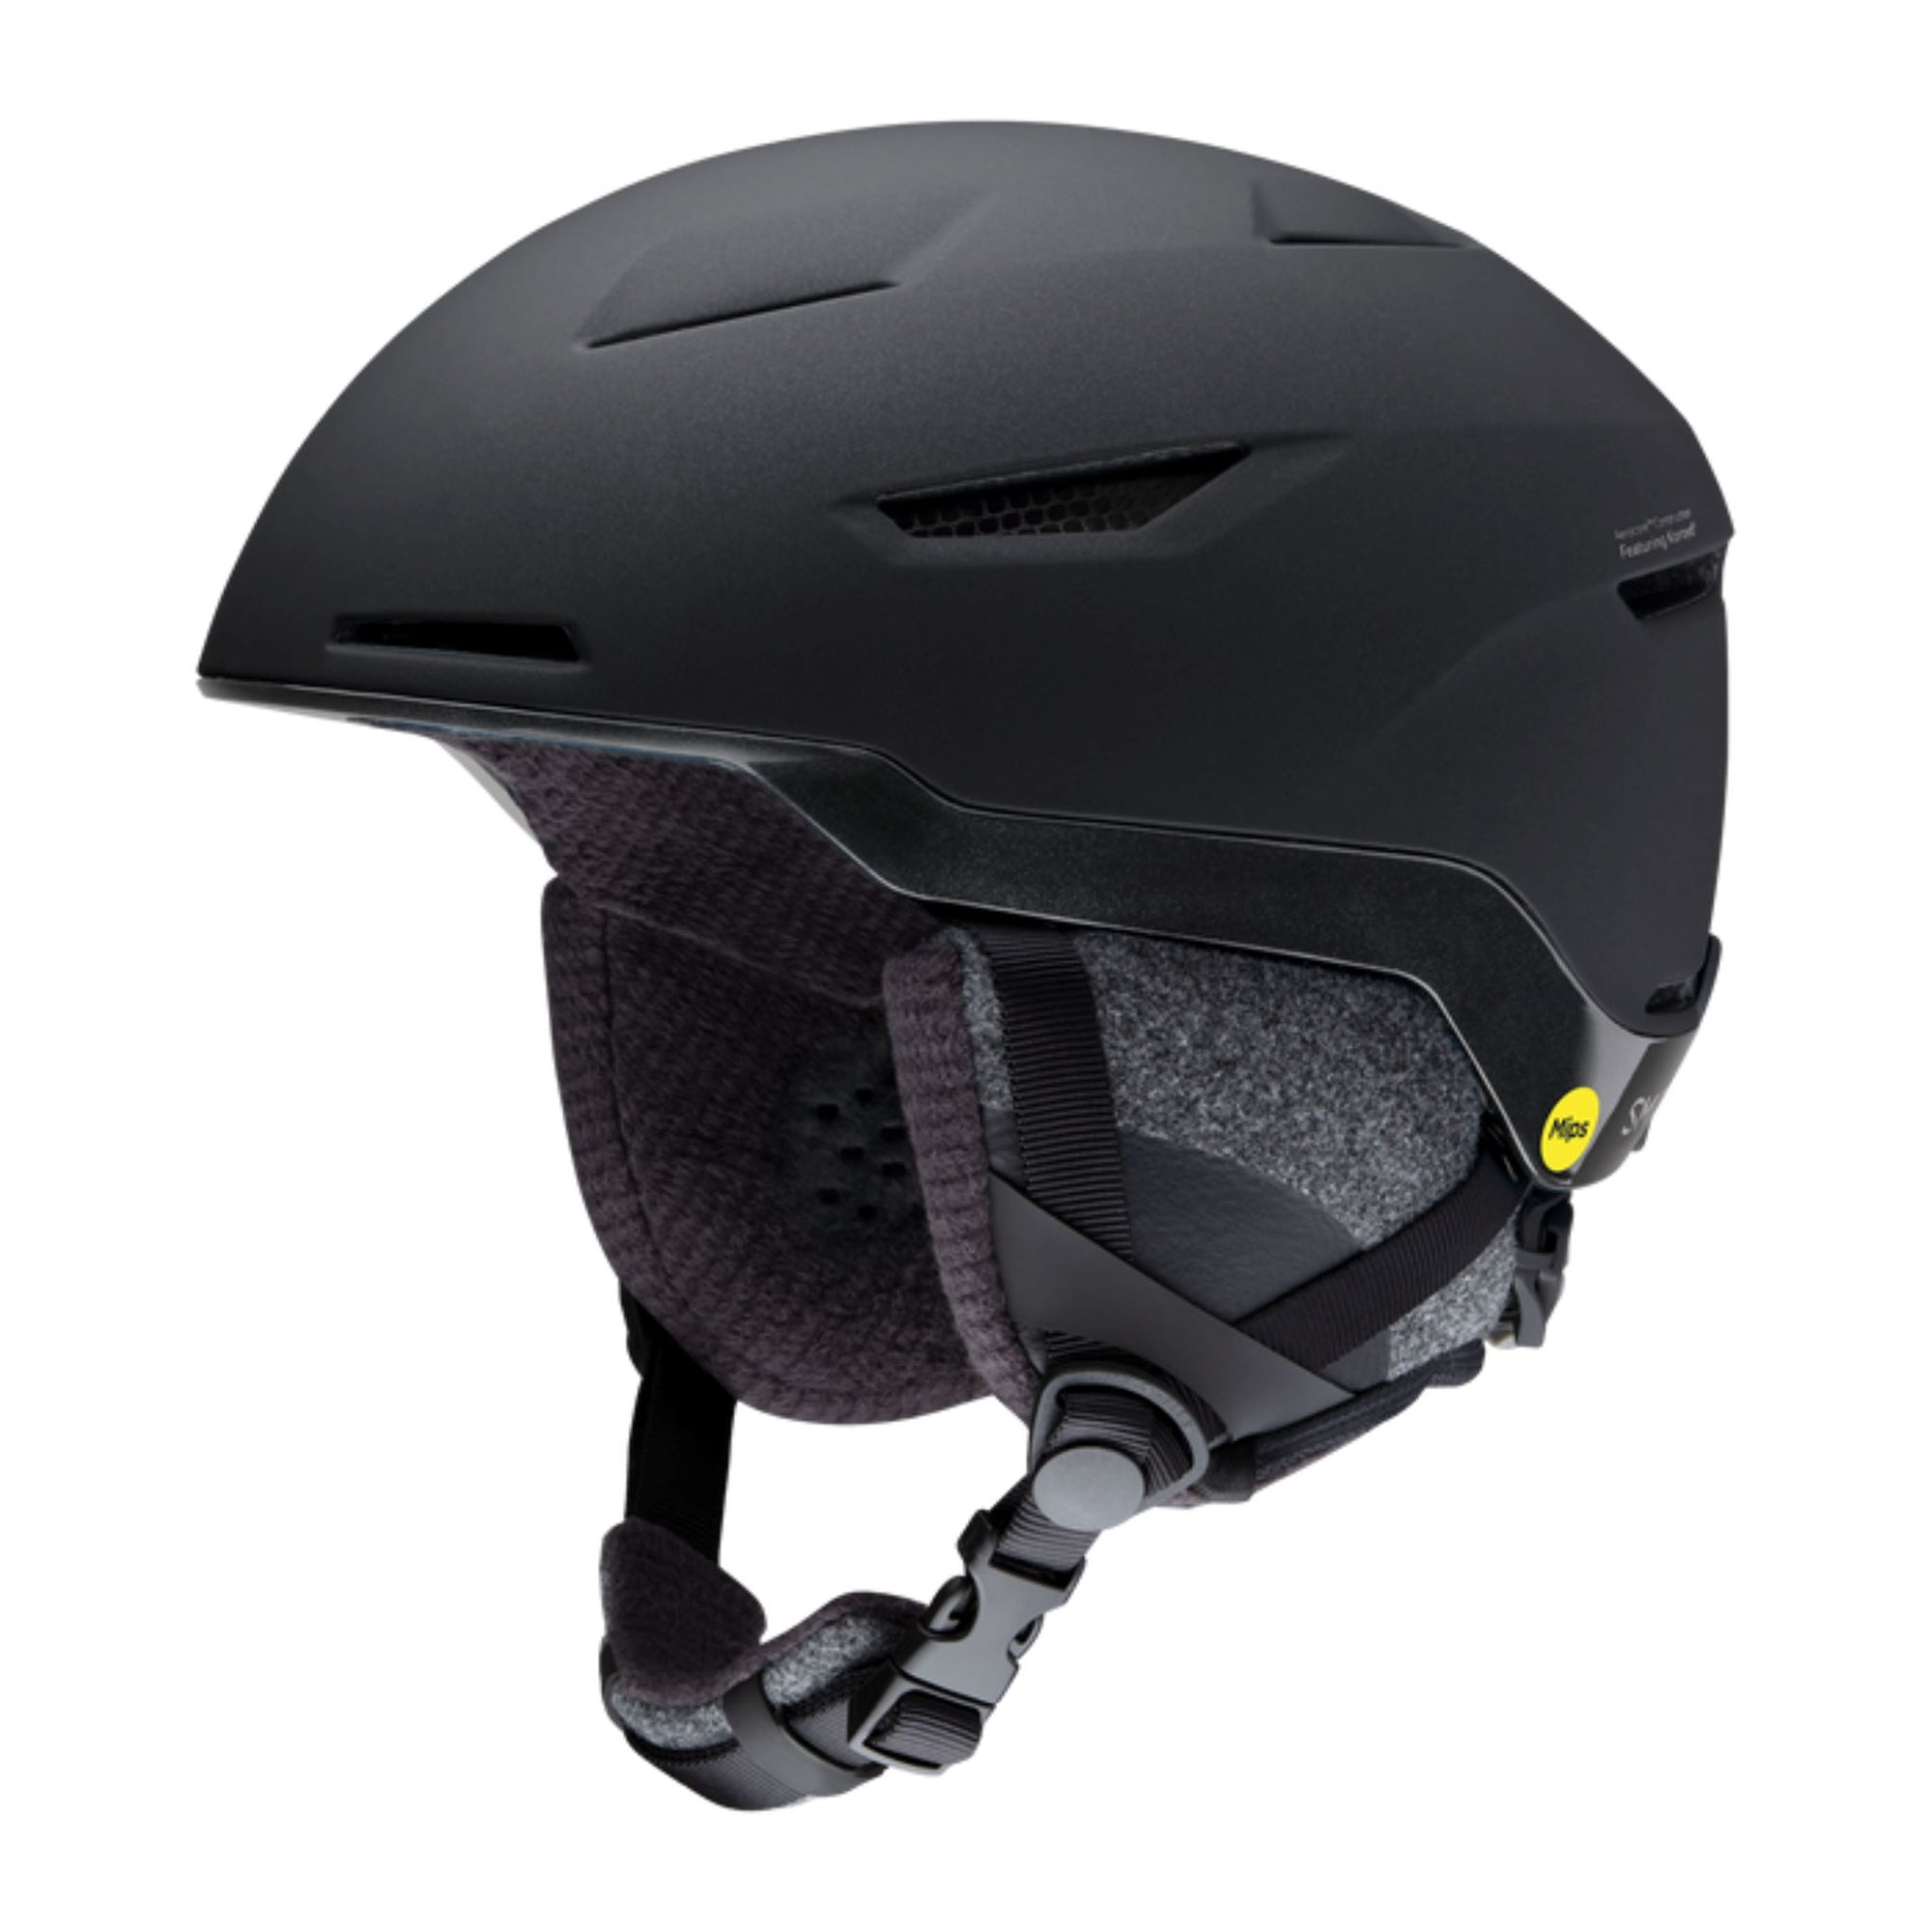 Womens Smith Vida MIPS Helmet - Matte Black Pearl Helmets Smith M - (55-59CM) 